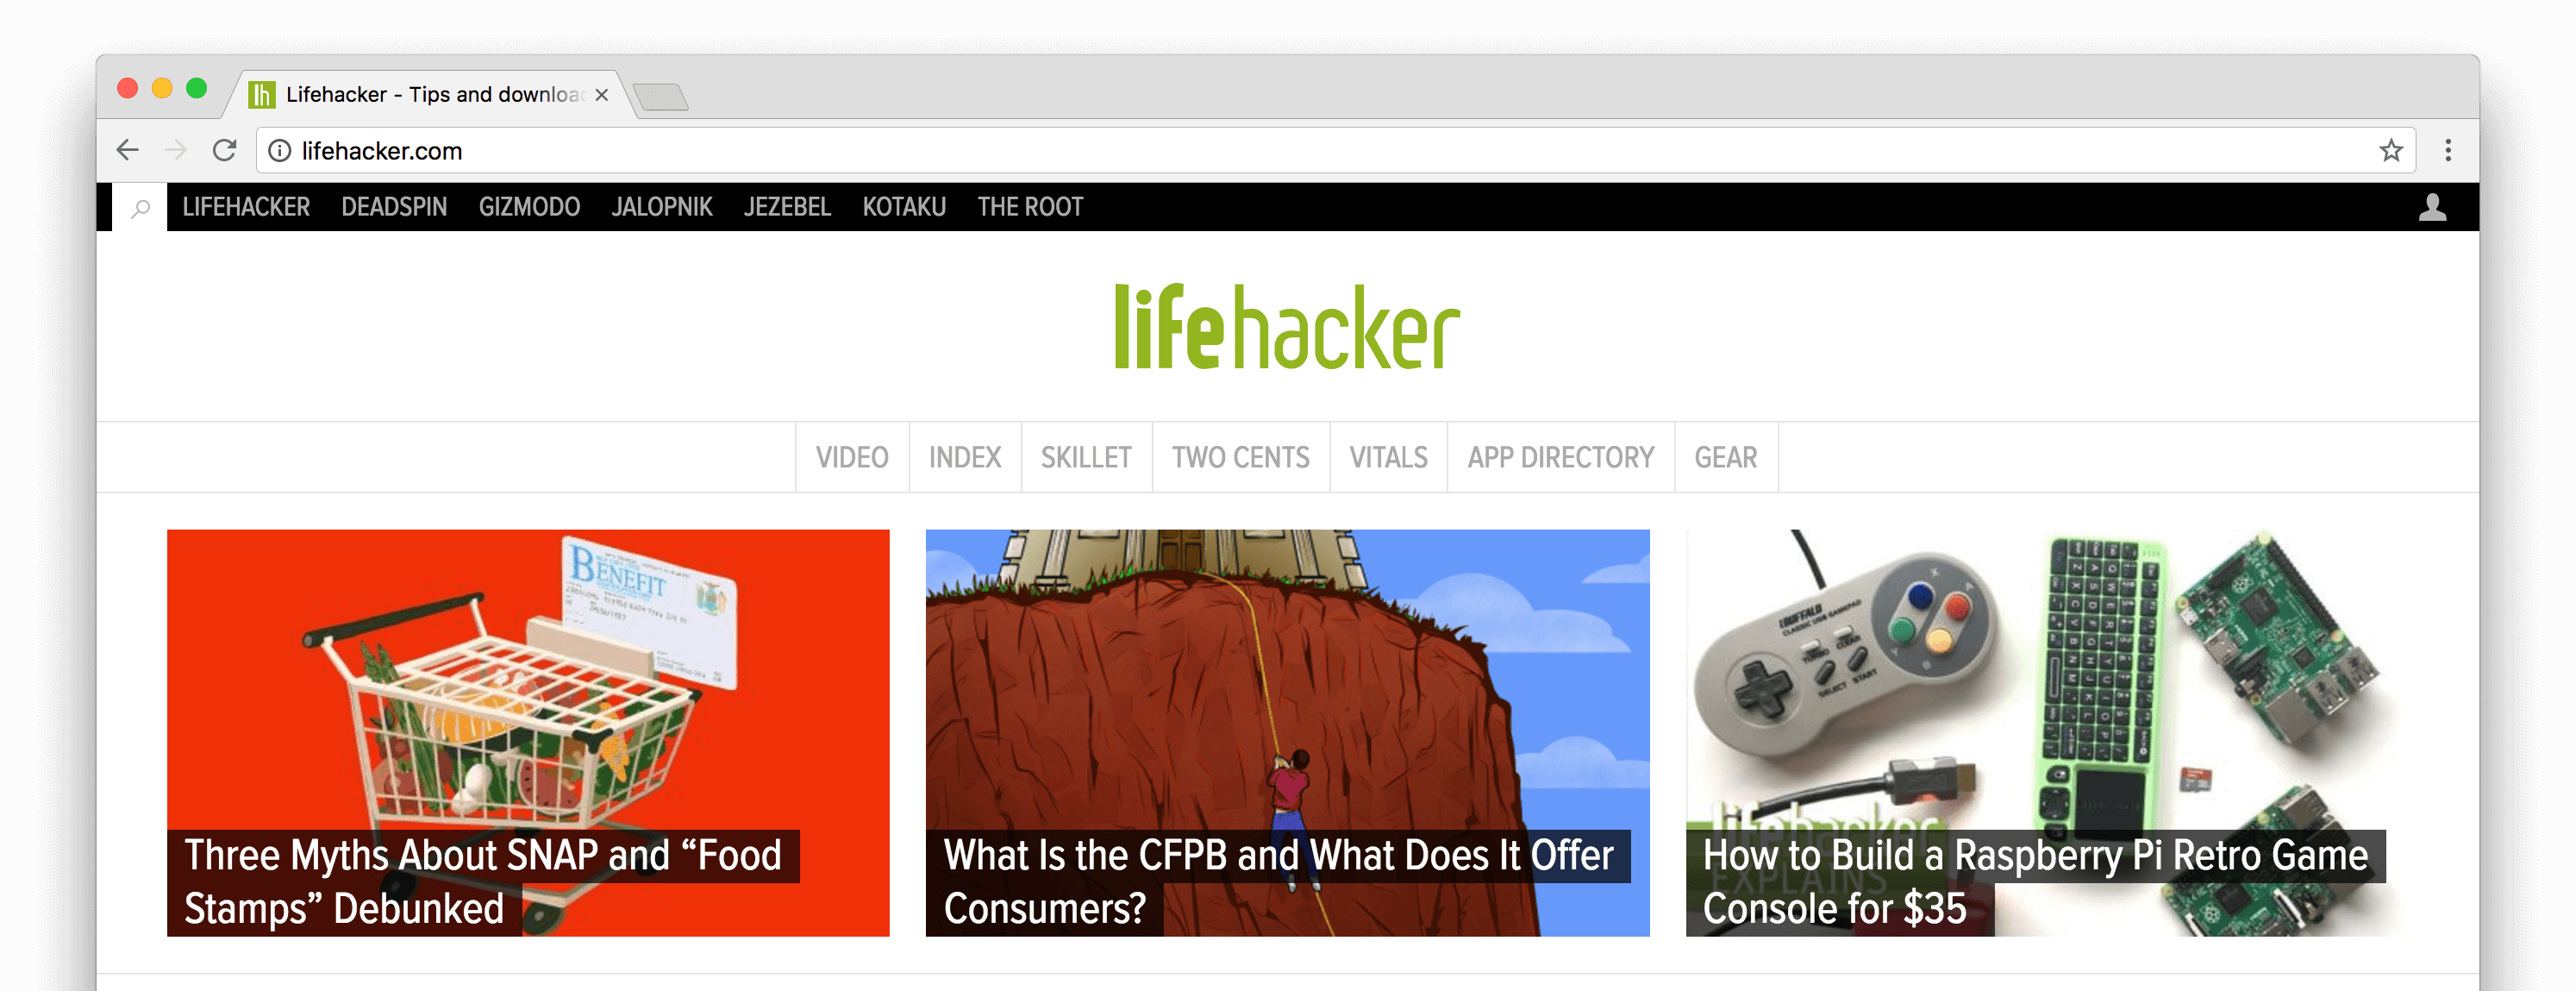 Lifehacker's domain name